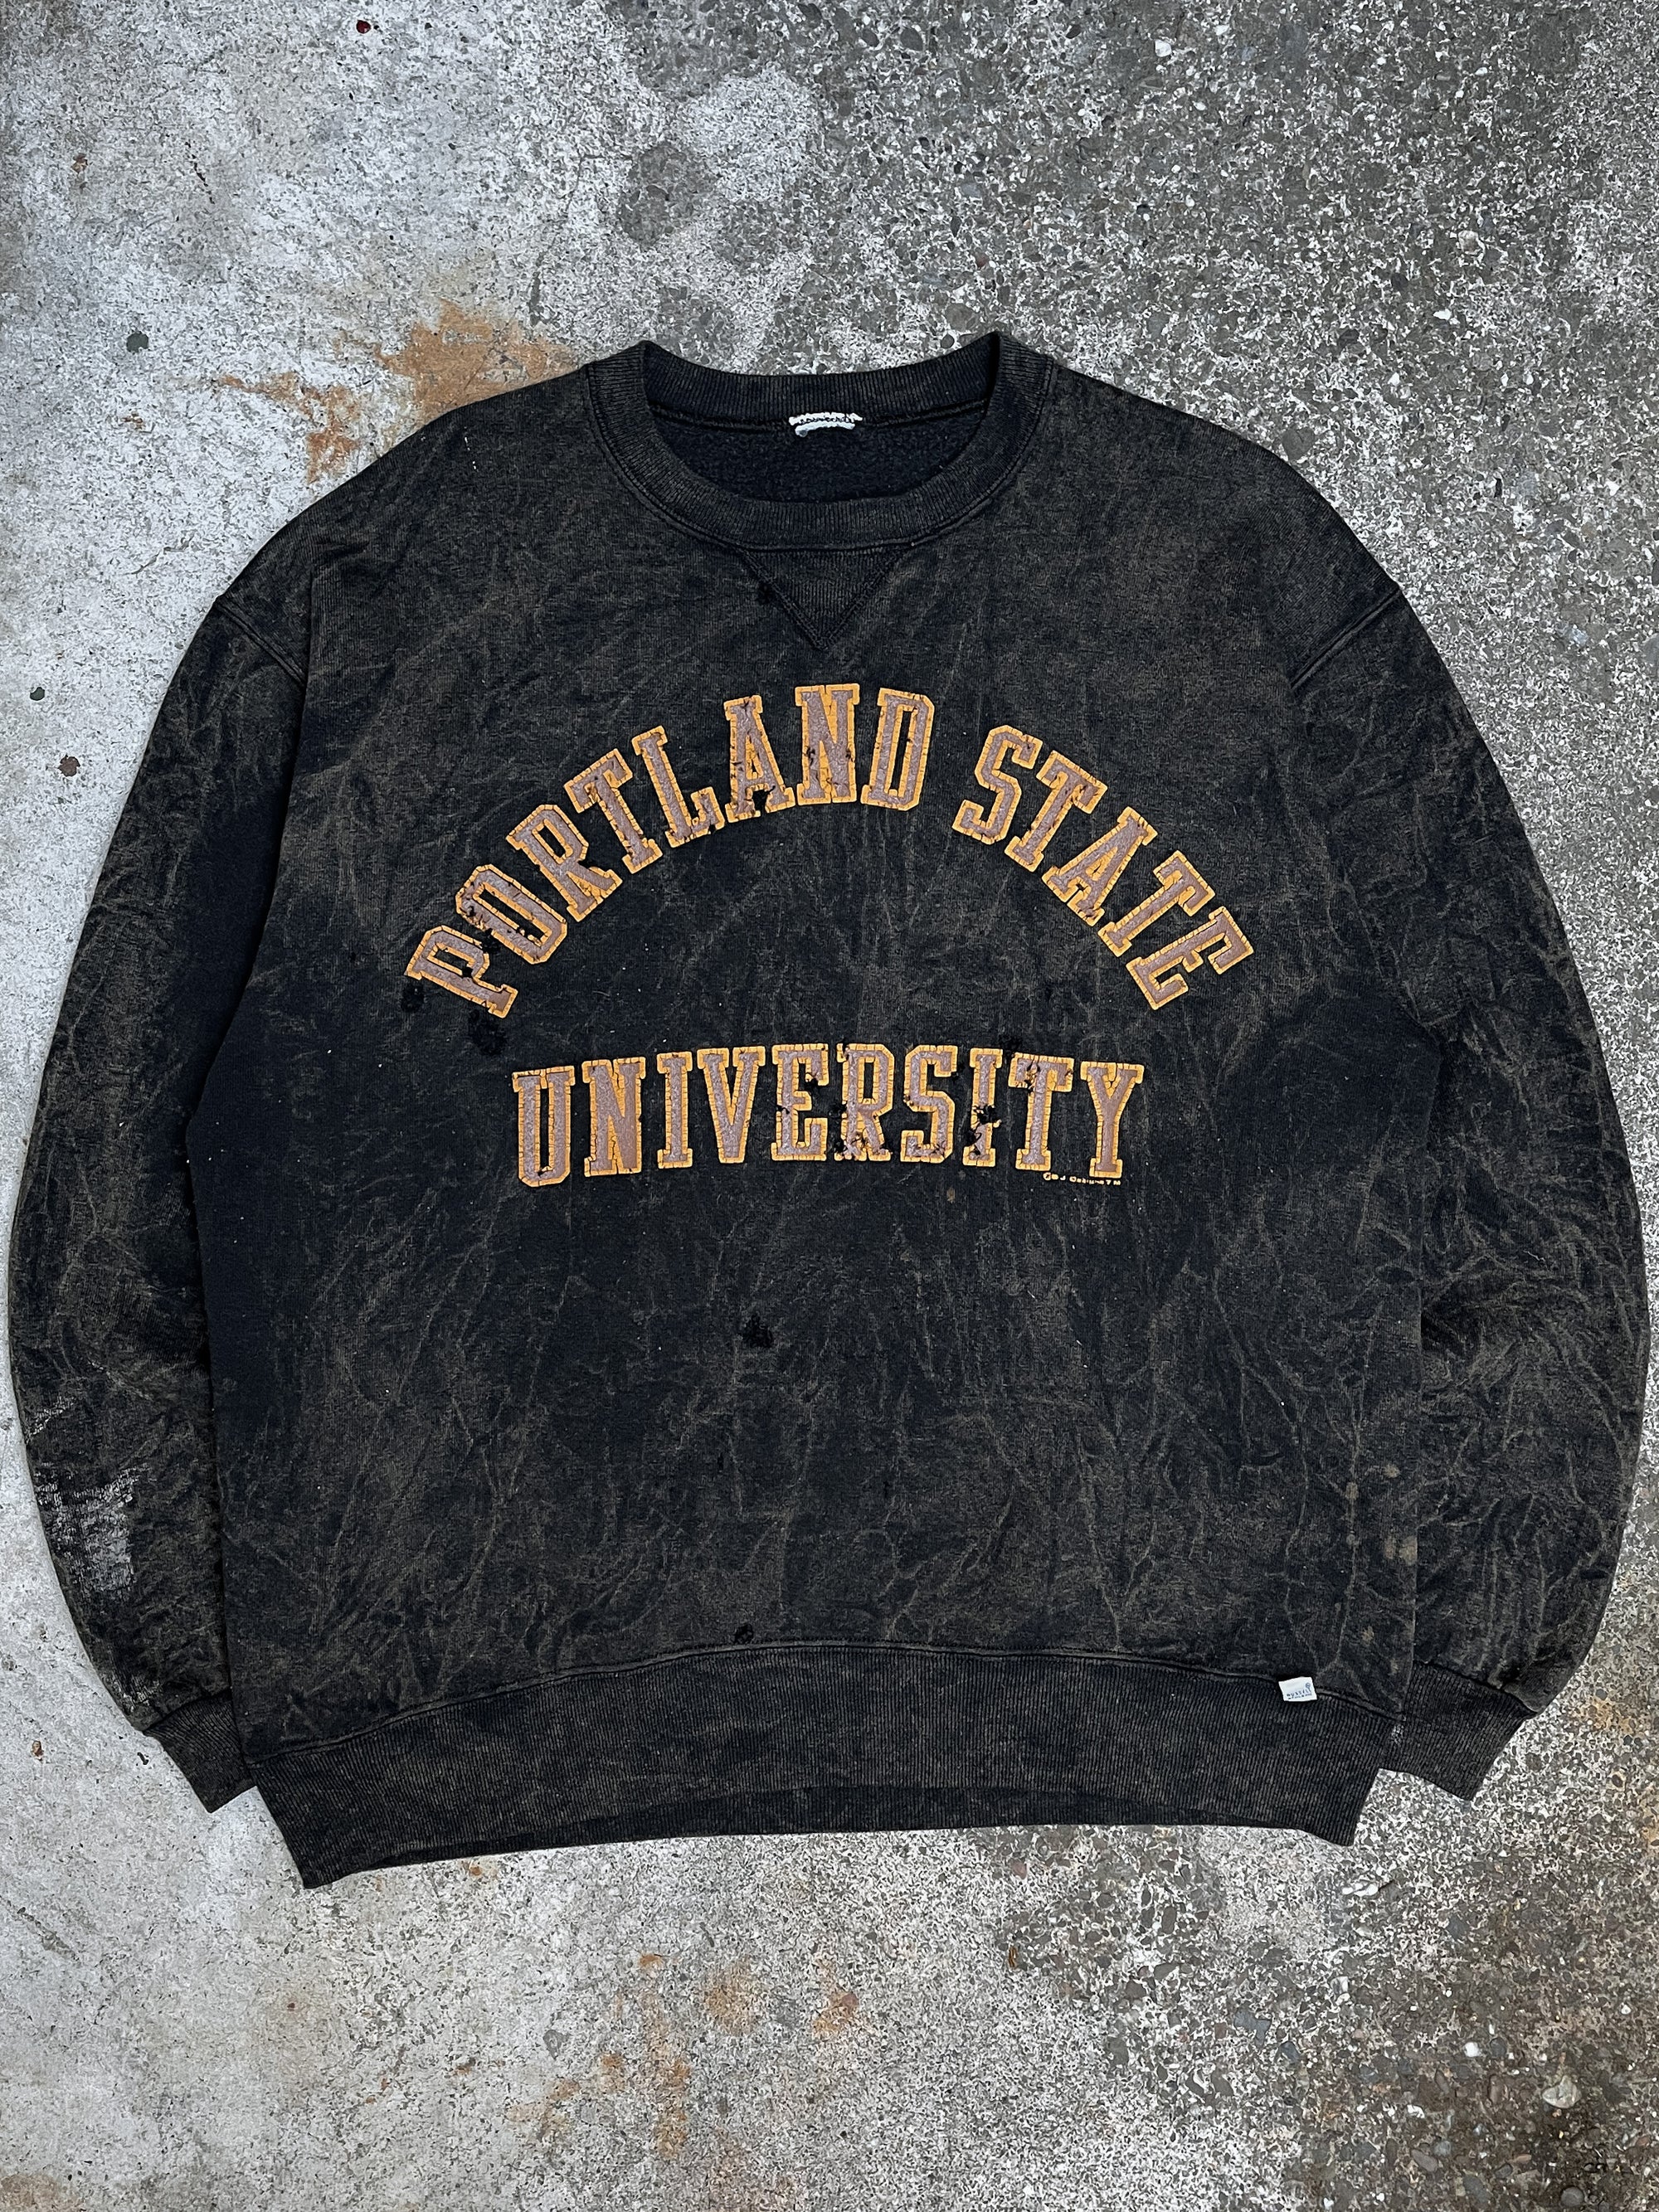 1990s Russell “Portland State University” Faded Sweatshirt (L)